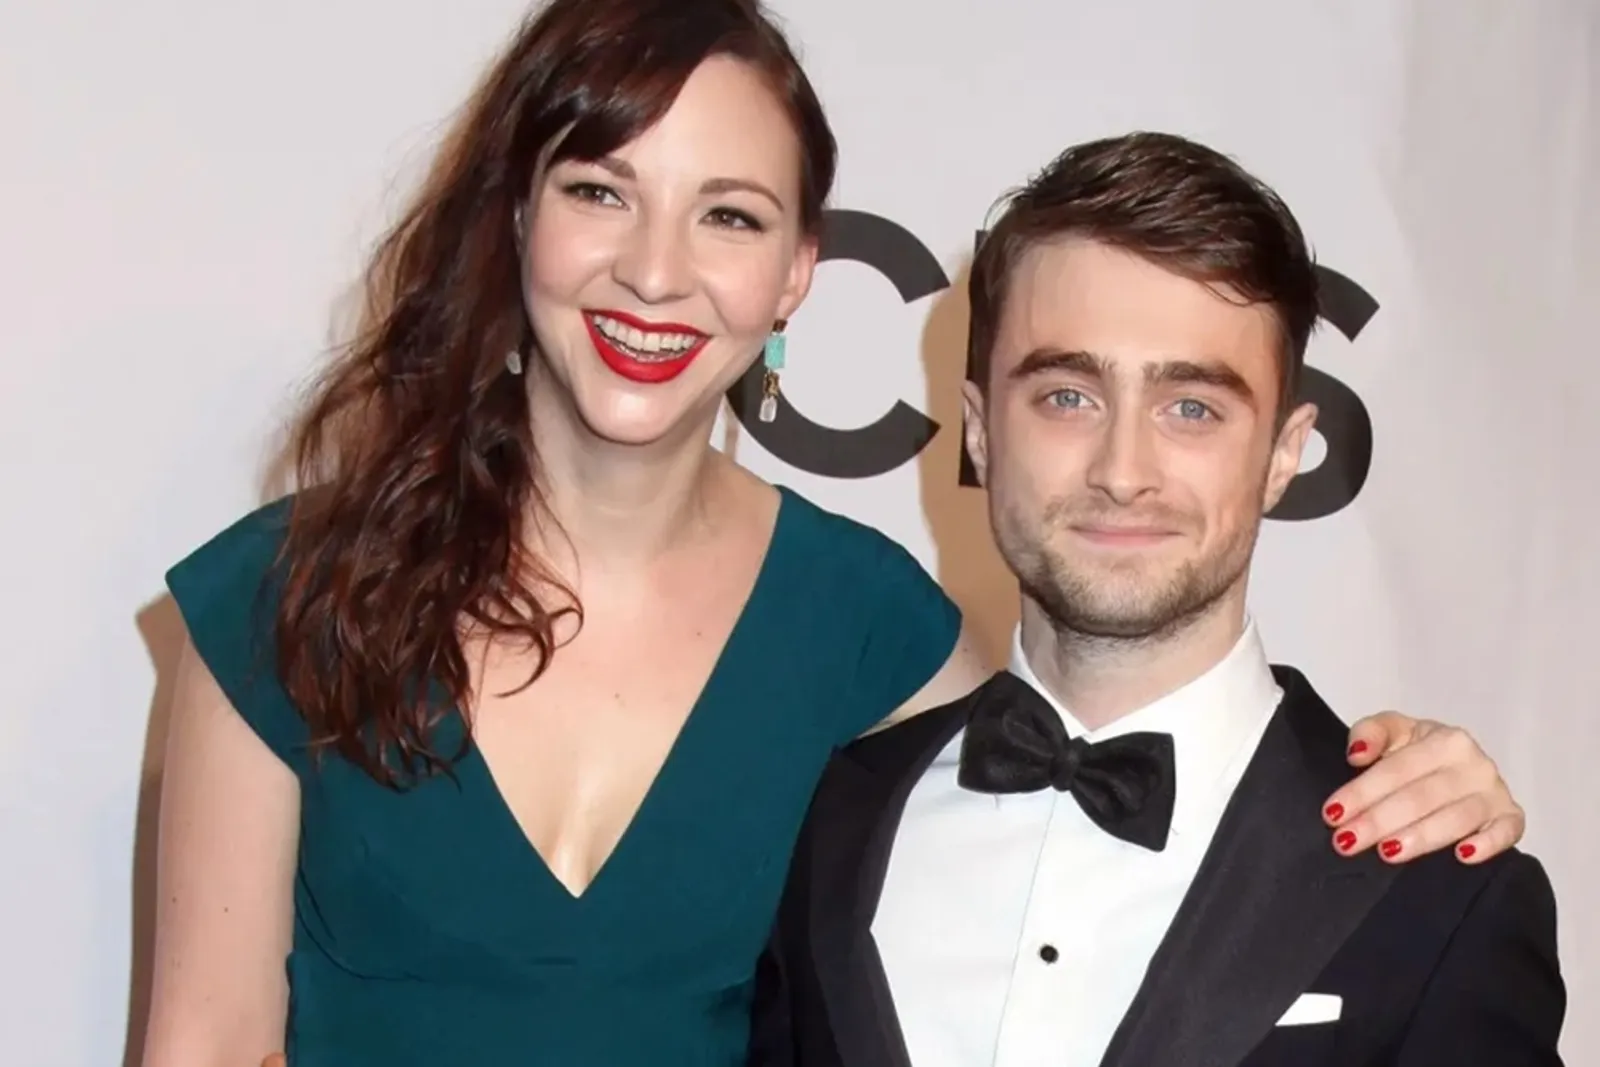 Selamat! Daniel Radcliffe ‘Harry Potter’ dan Kekasih Akan Punya Anak